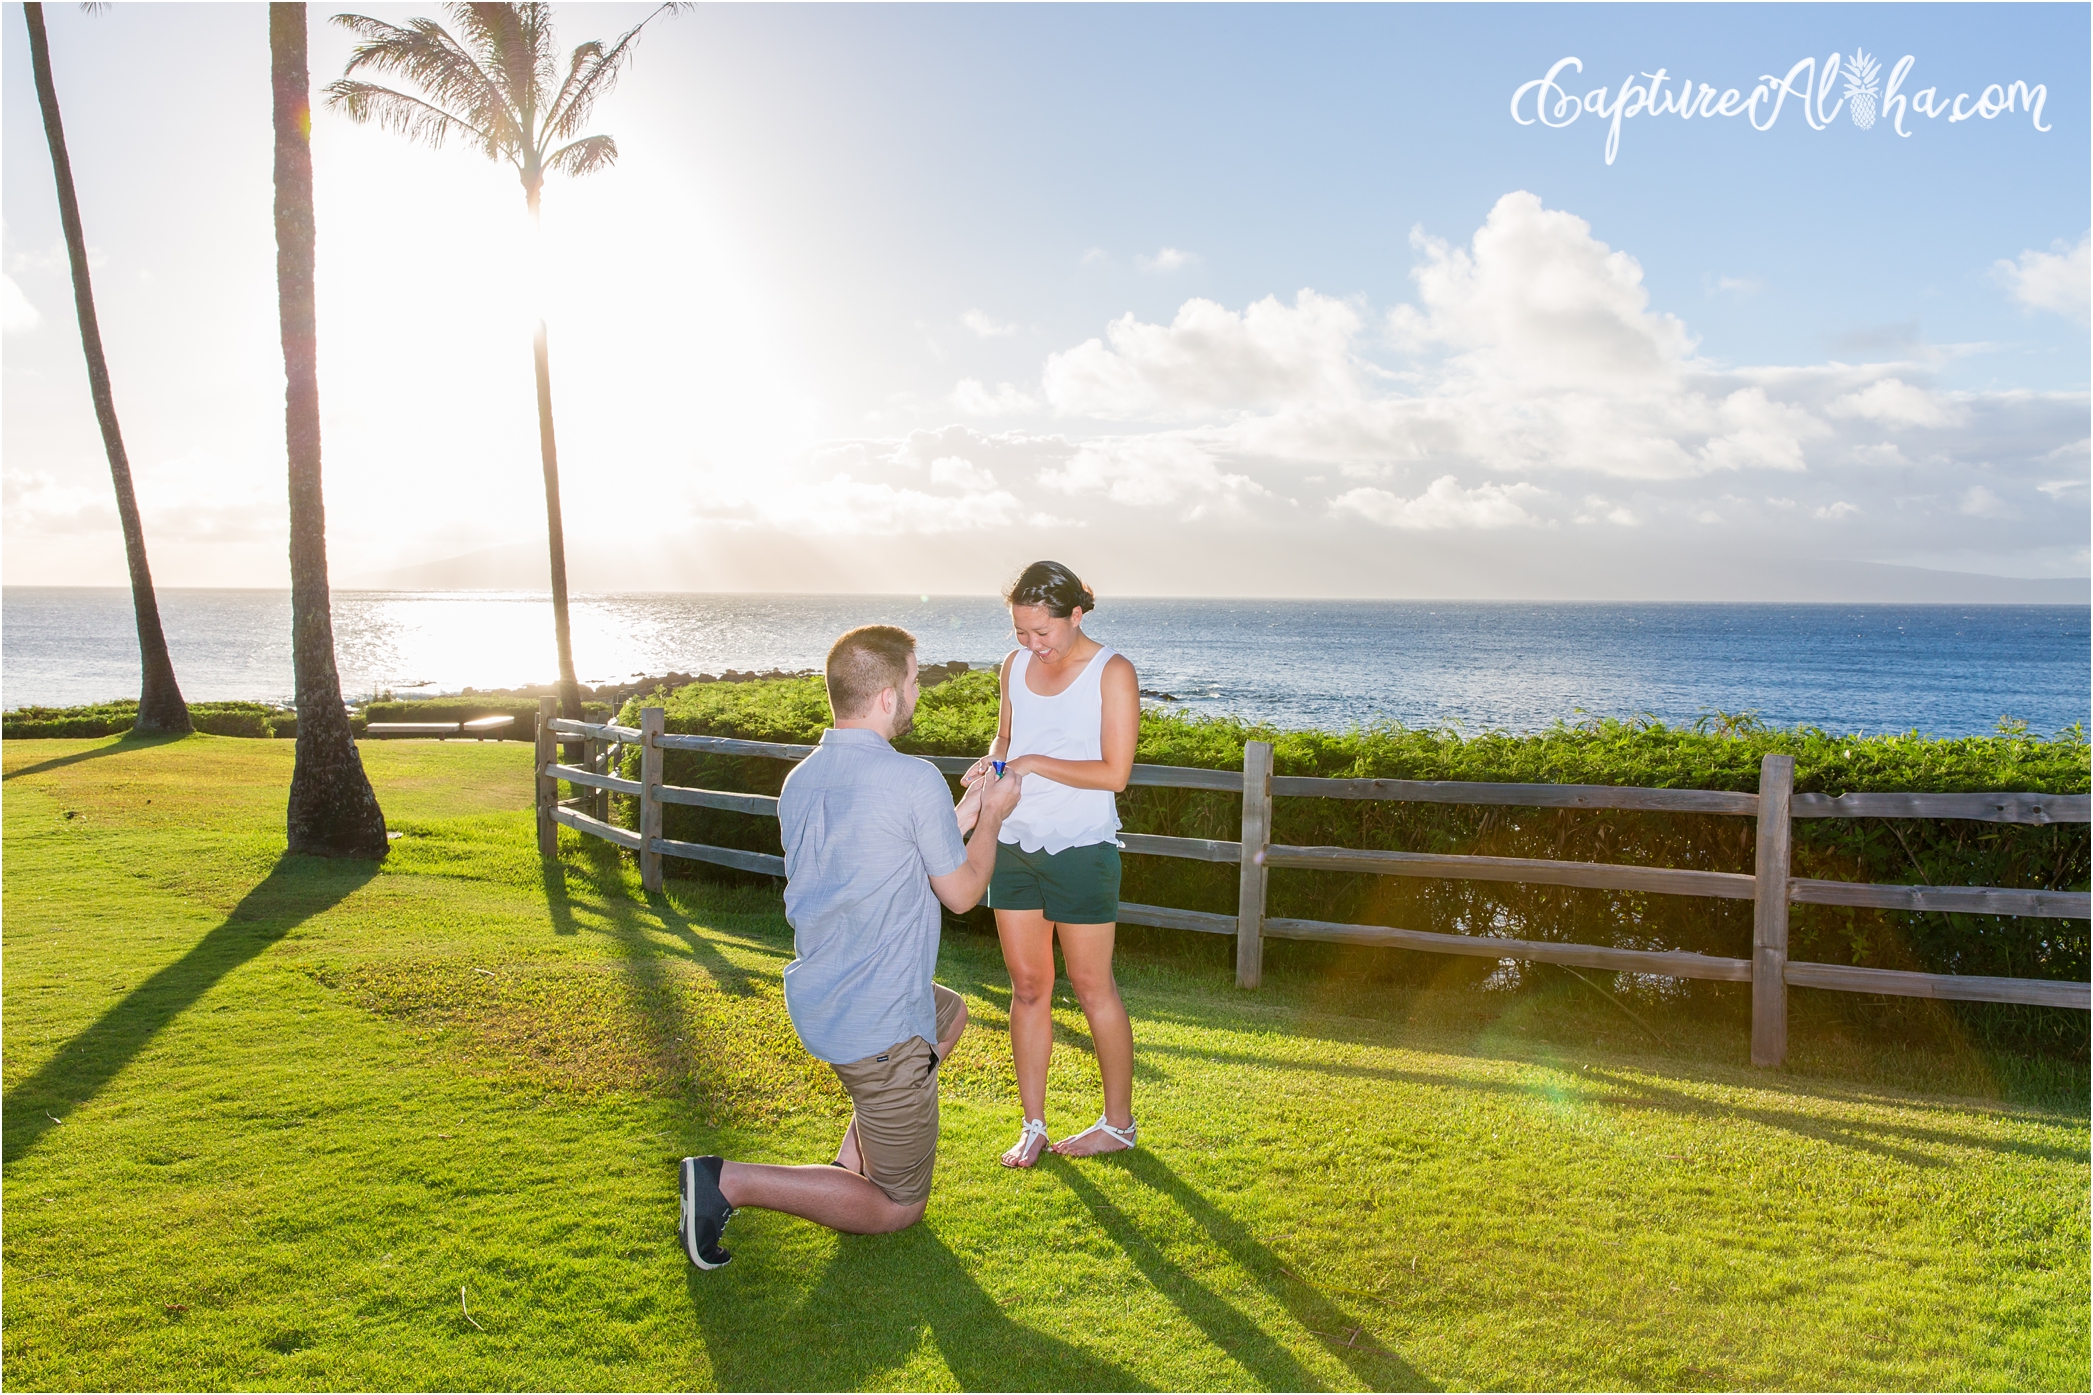 Maui Engagement Photography at Kapalua Bay during sunset